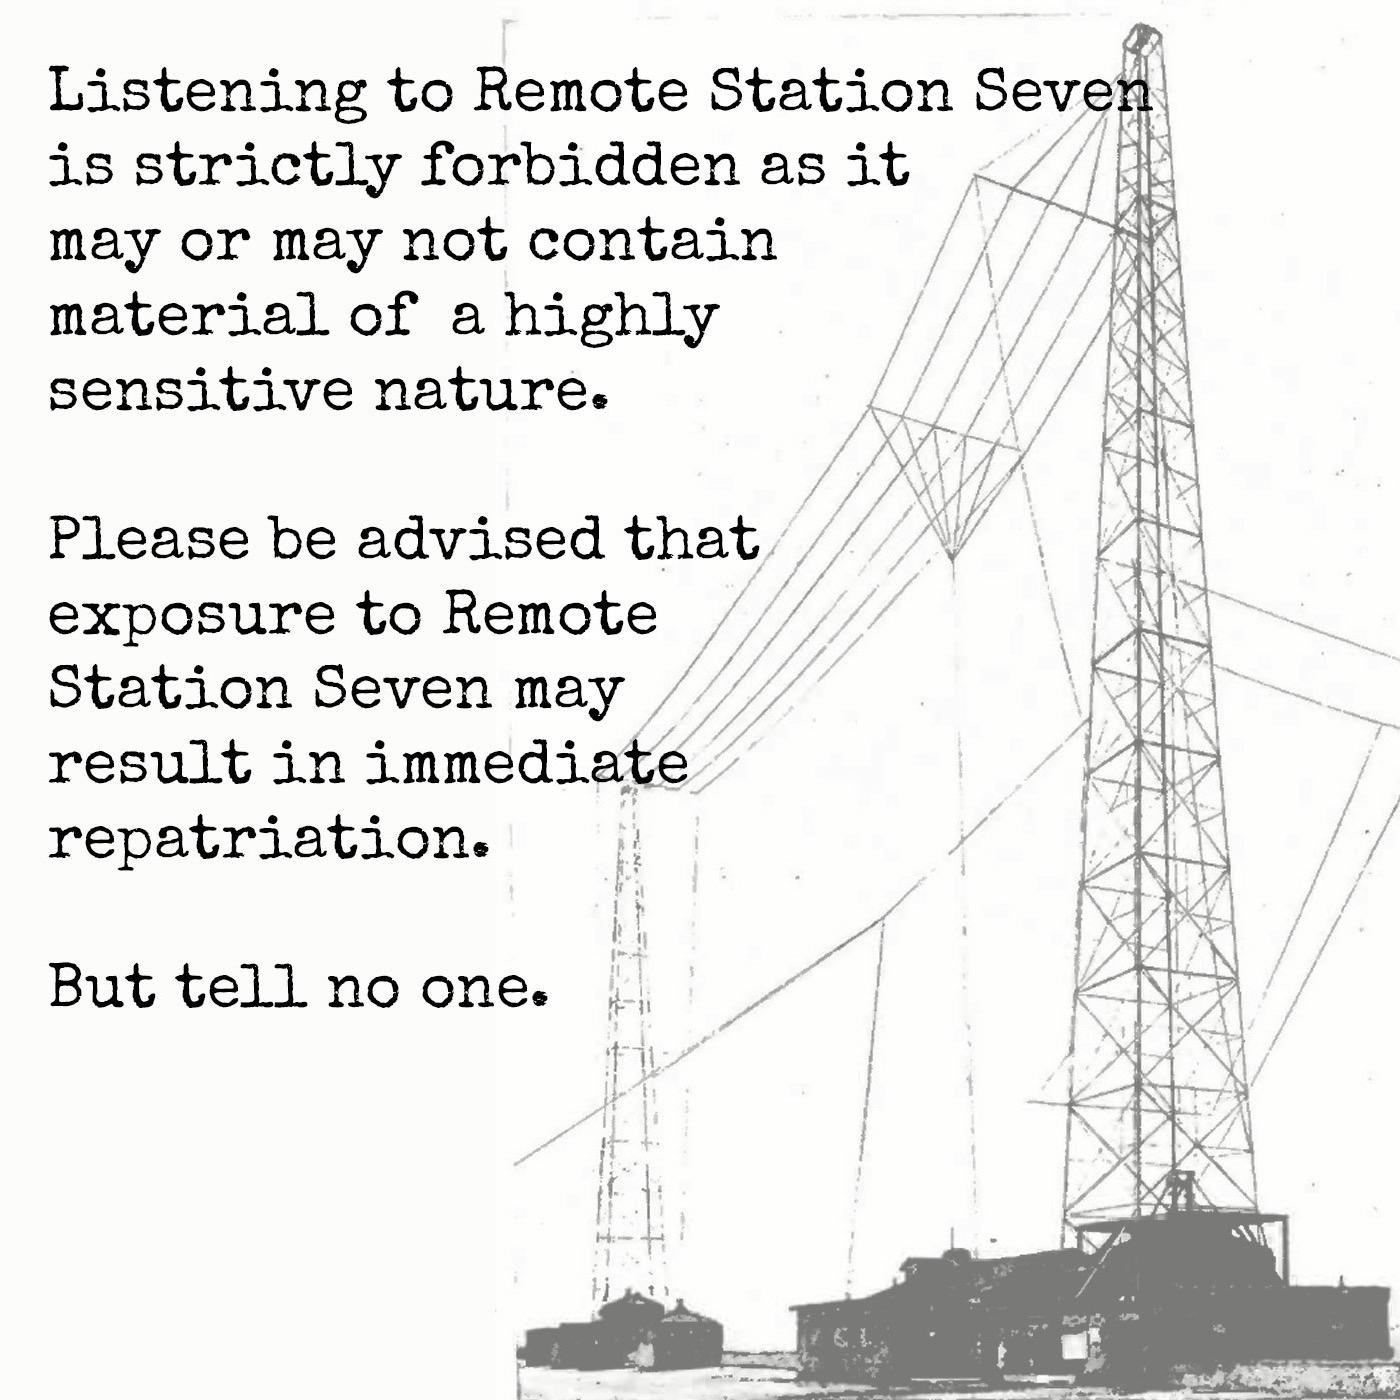 Remote Station Seven